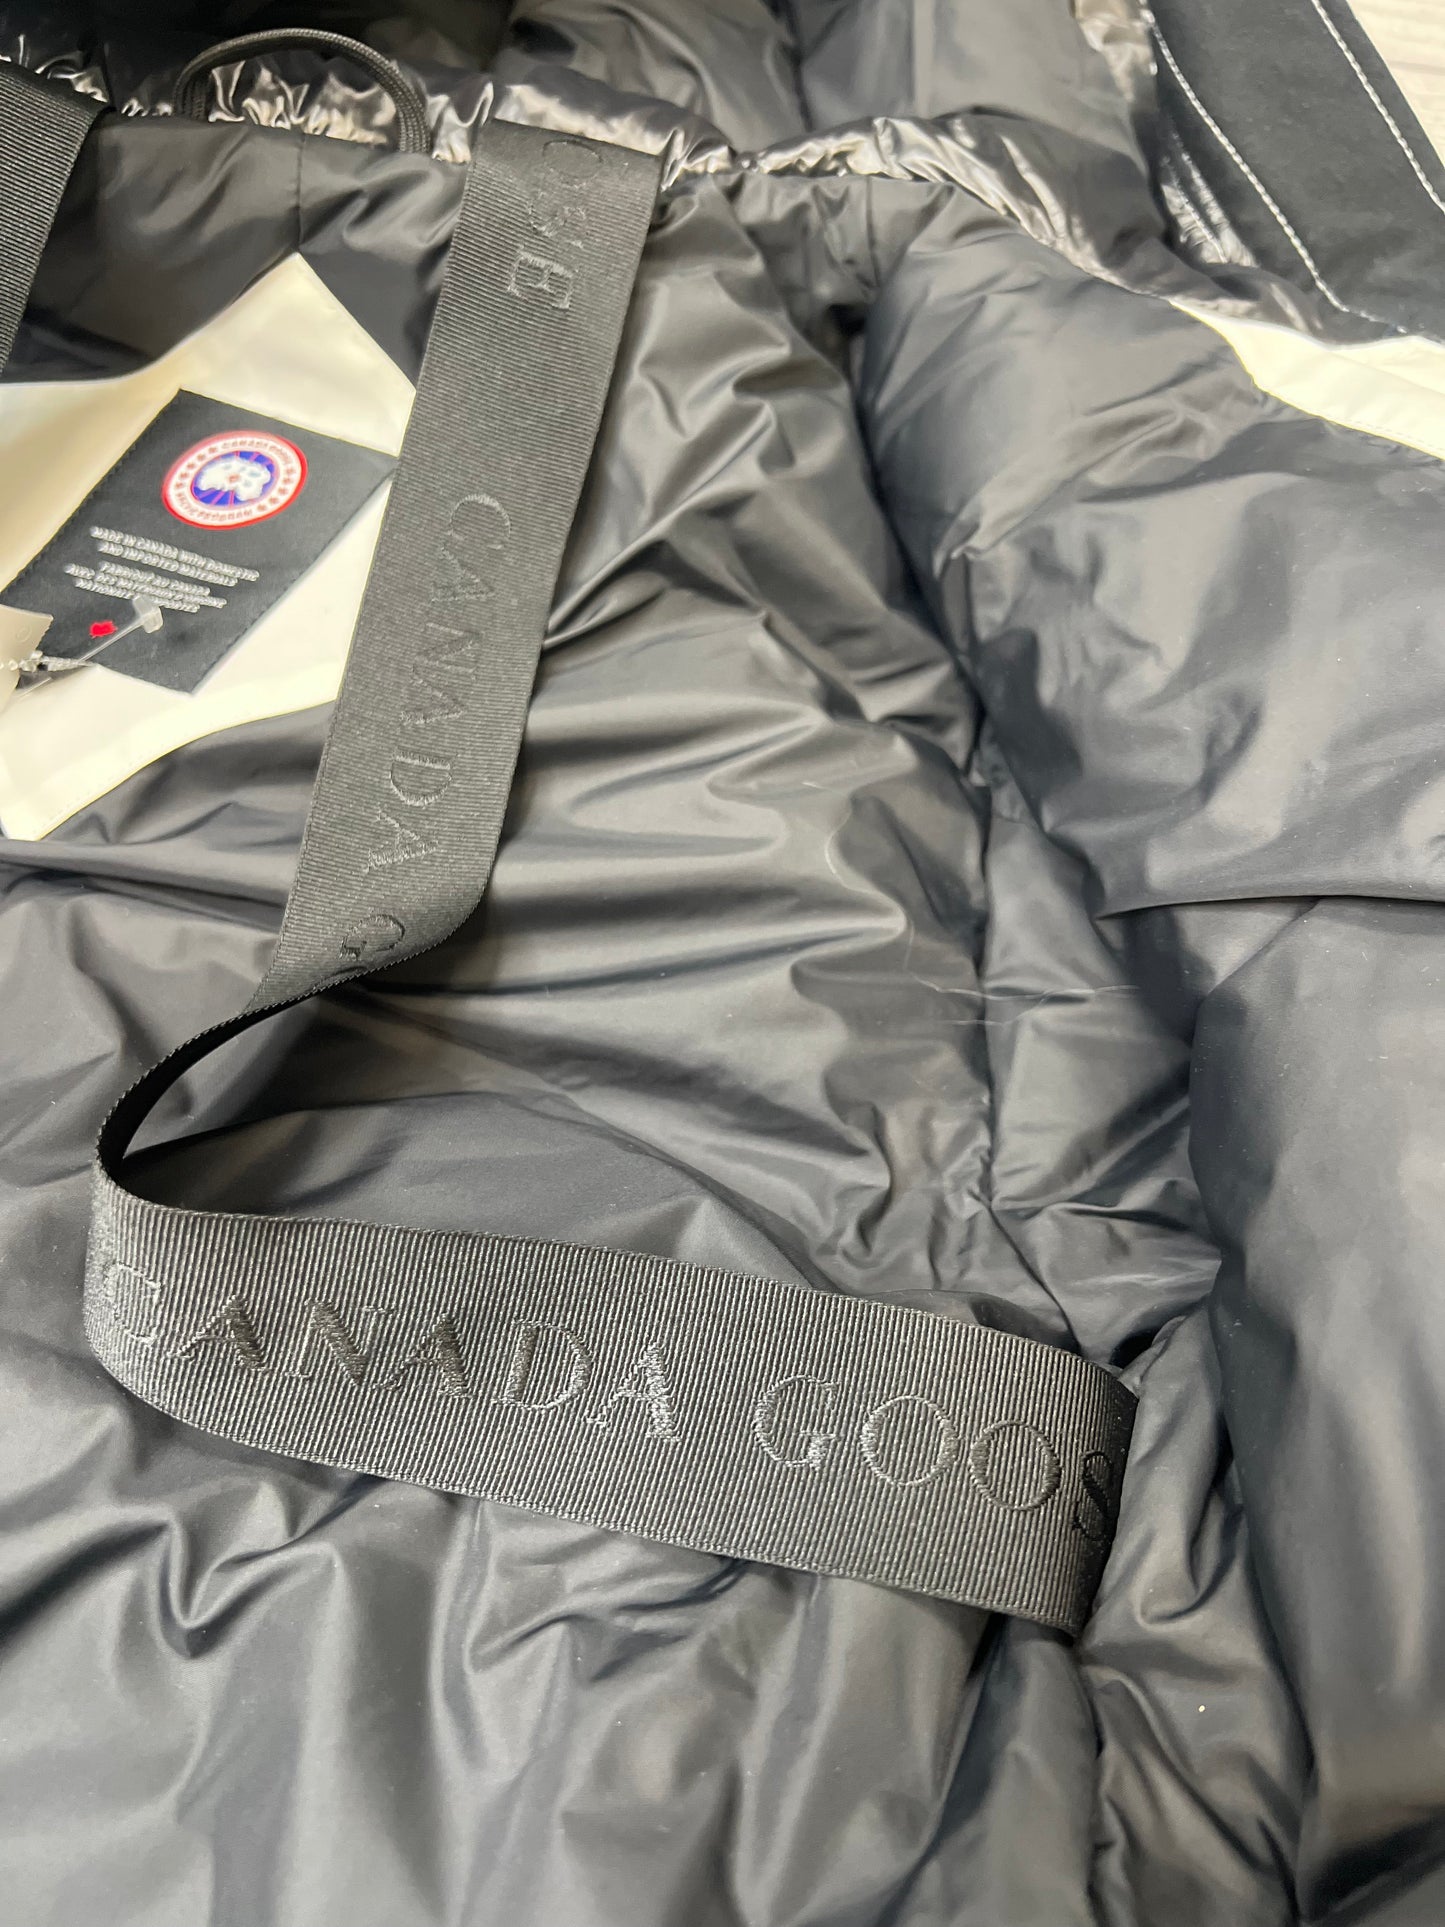 Canada Goose White Coat / Parka, Size L